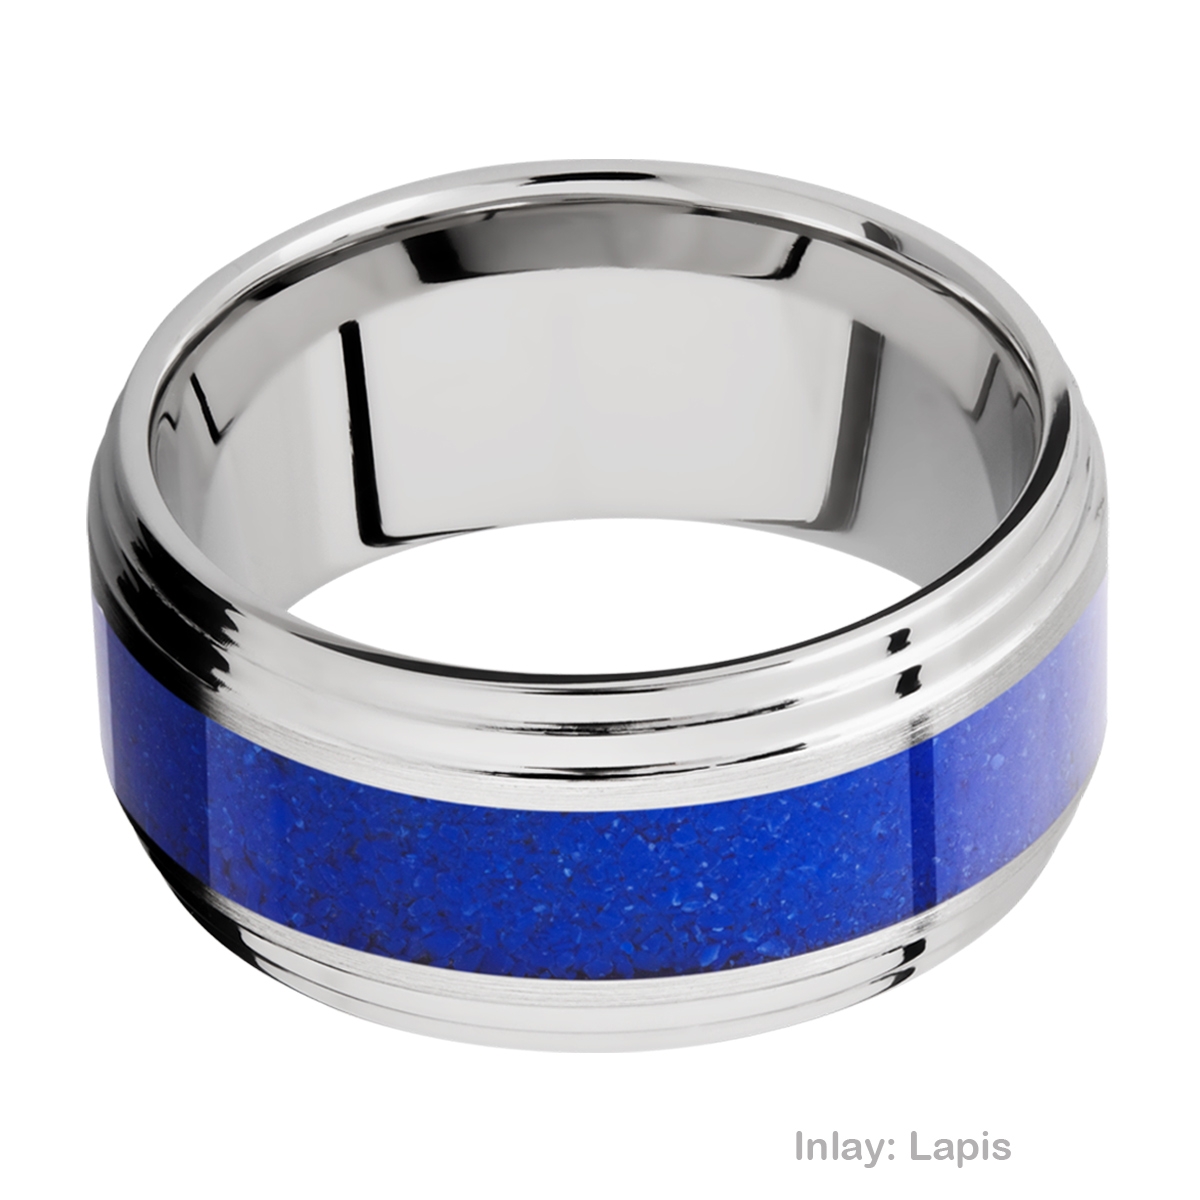 Lashbrook CC10F2S15/MOSAIC Cobalt Chrome Wedding Ring or Band